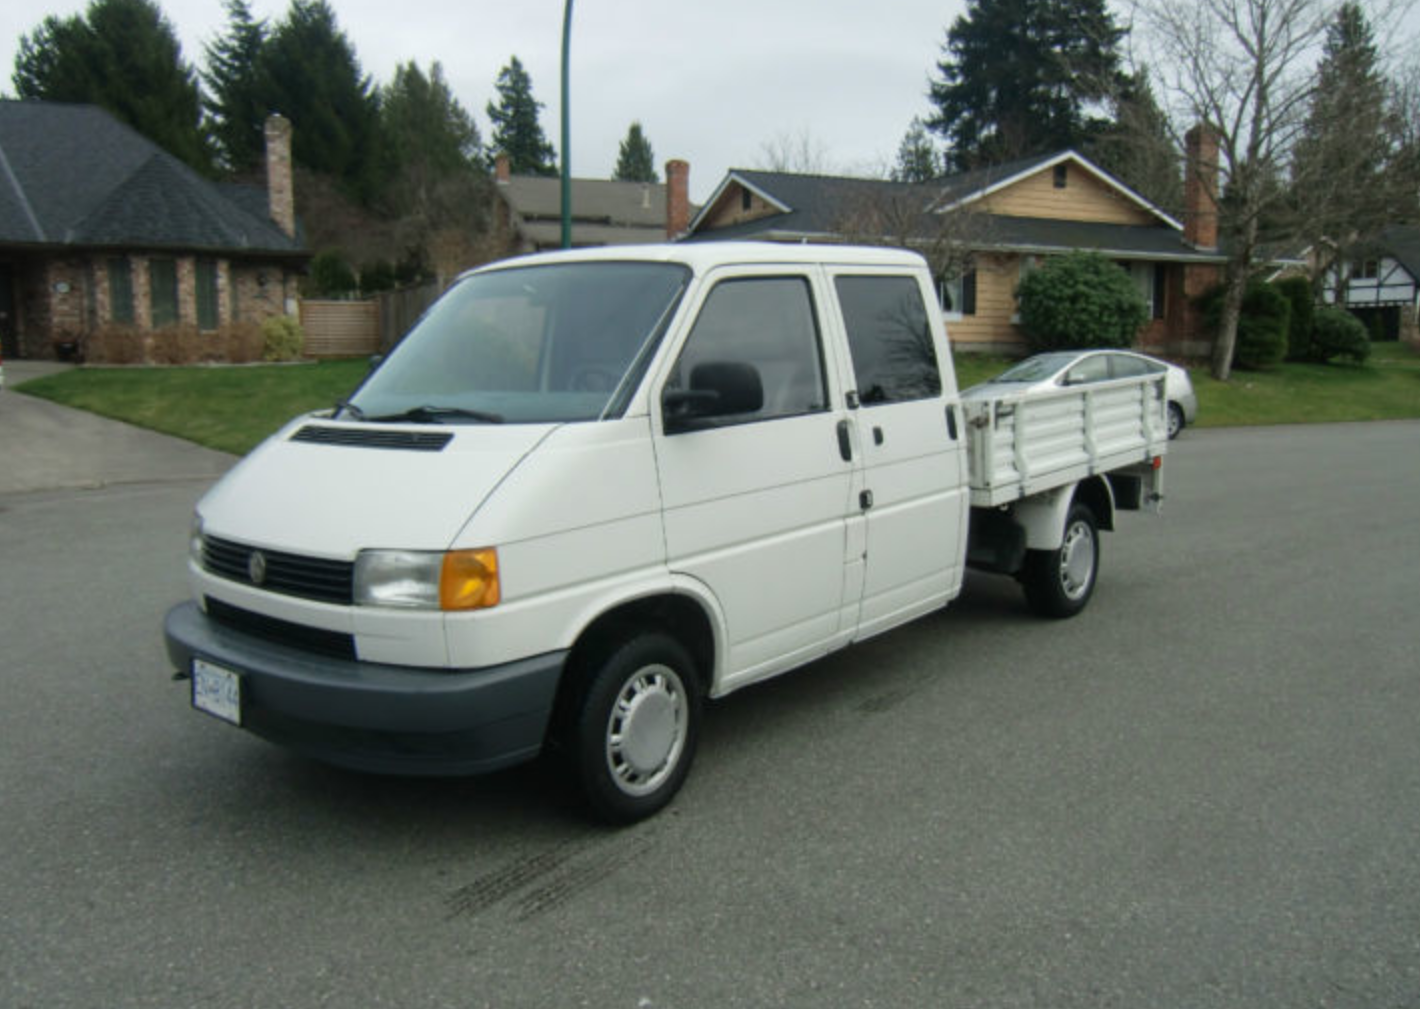 vw t4 vans for sale on ebay